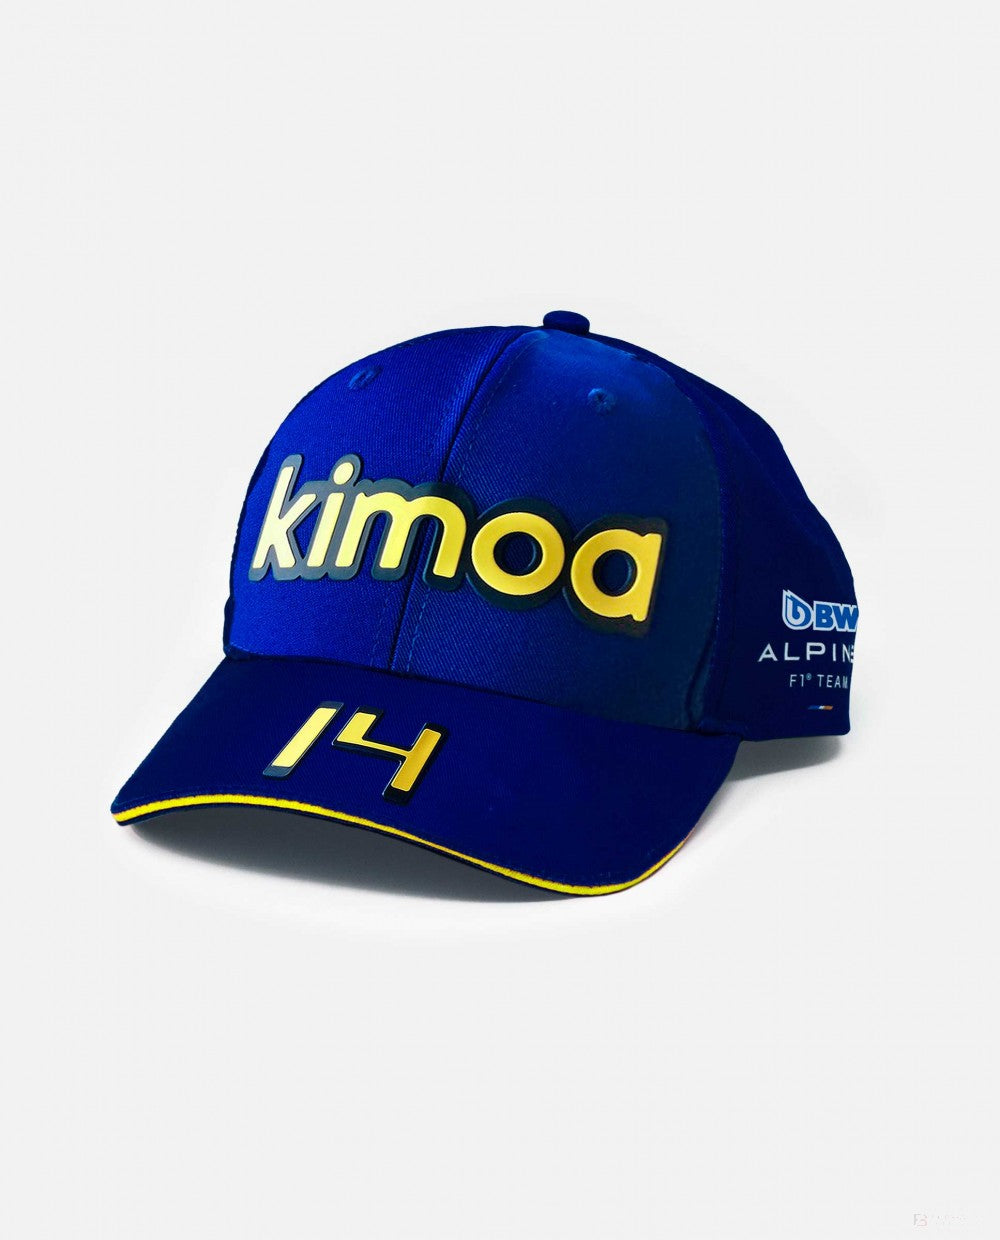 Alpine Baseball Cap, Fernando Alonso Kimoa Spain GP, Blue, 2022